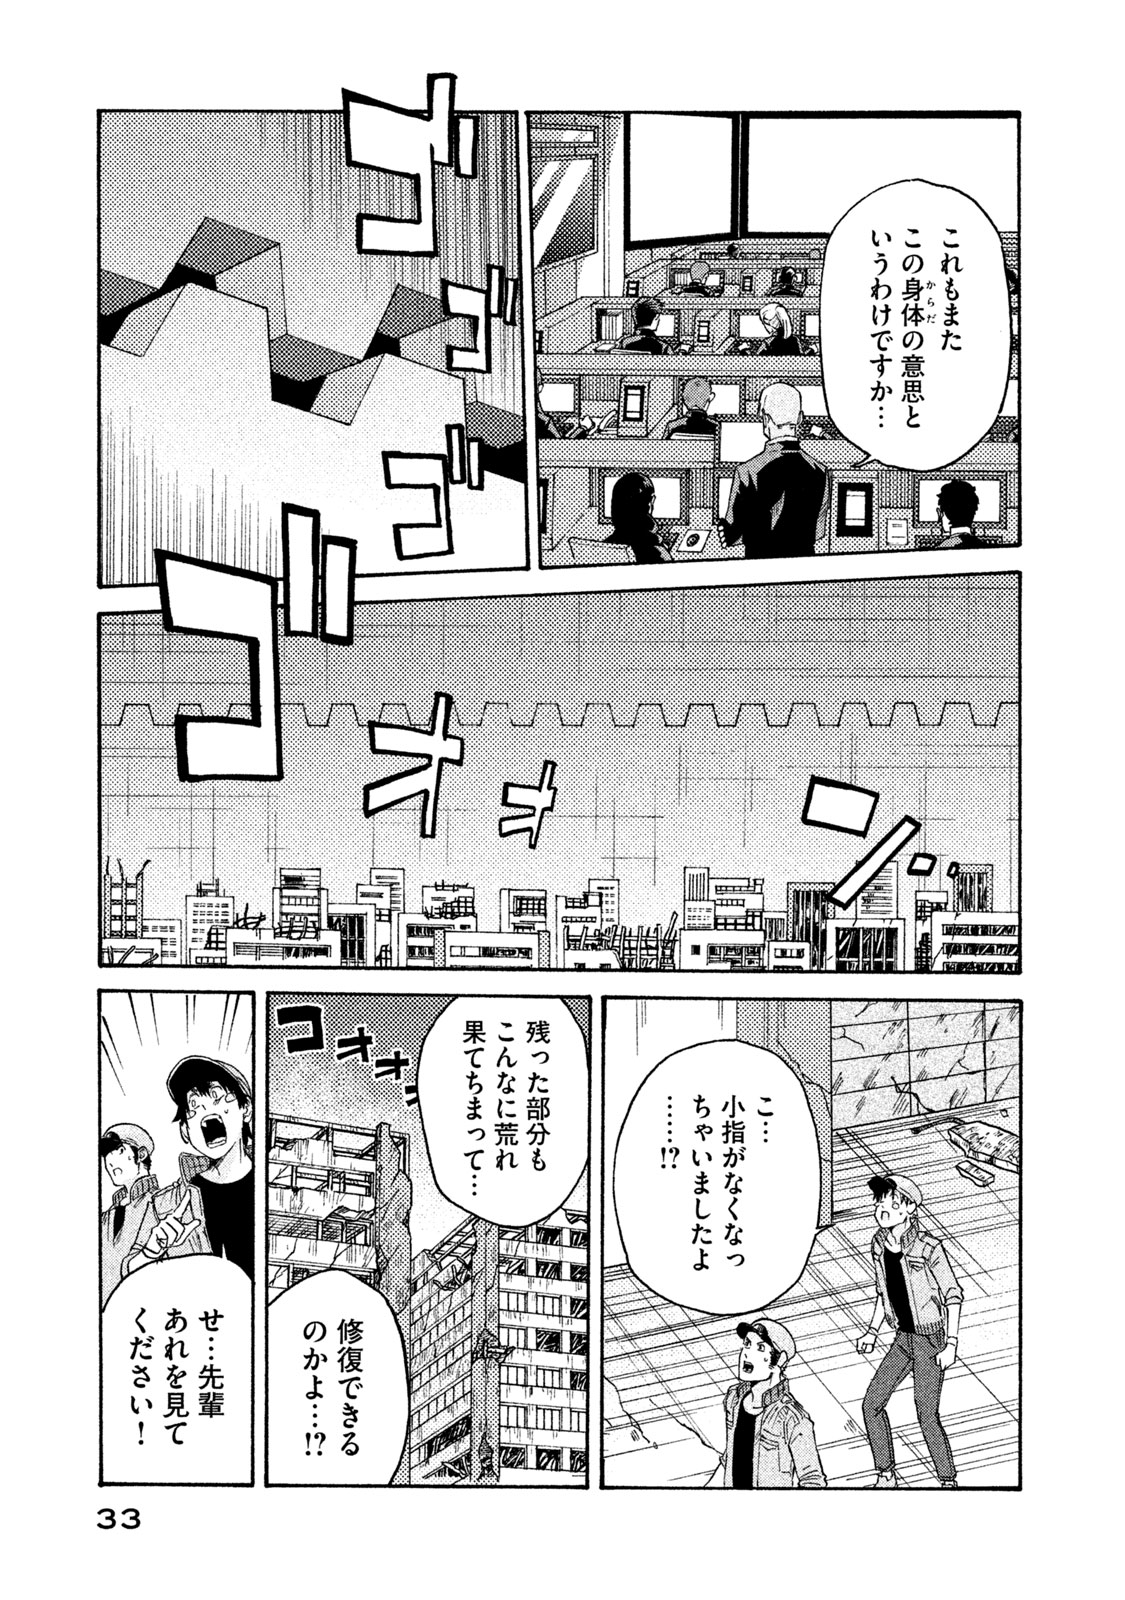 Hataraku Saibou BLACK - Chapter 26 - Page 11